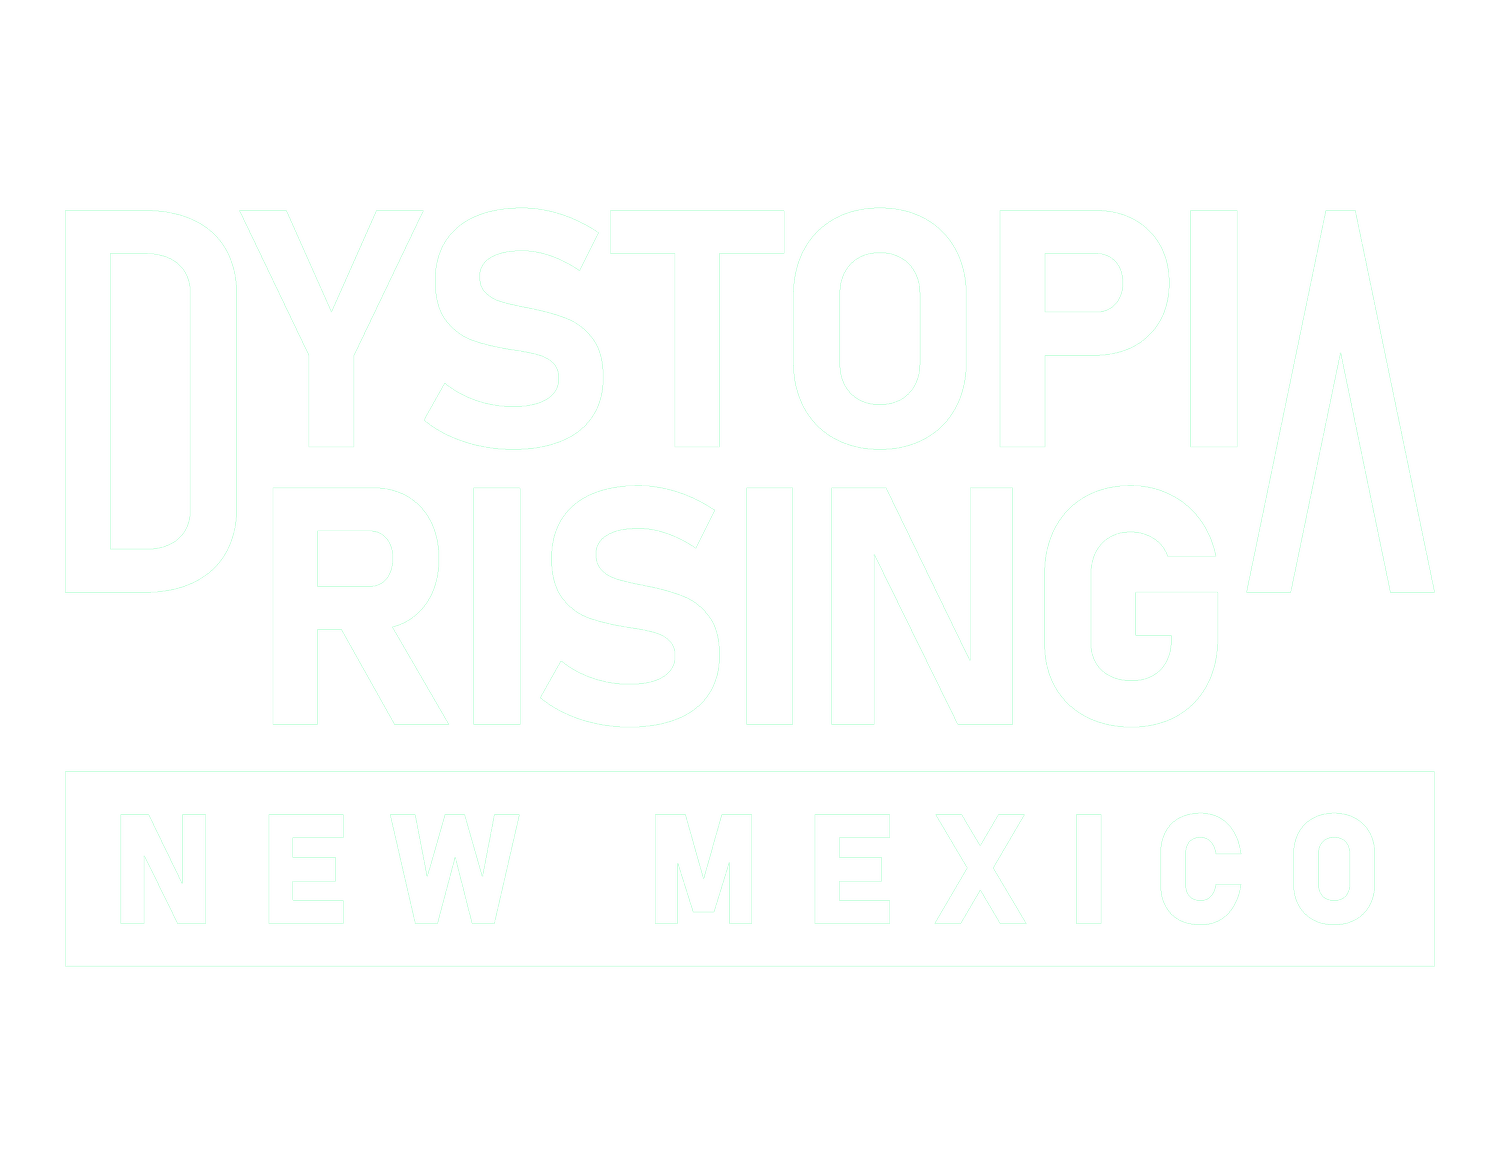 Dystopia Rising New Mexico